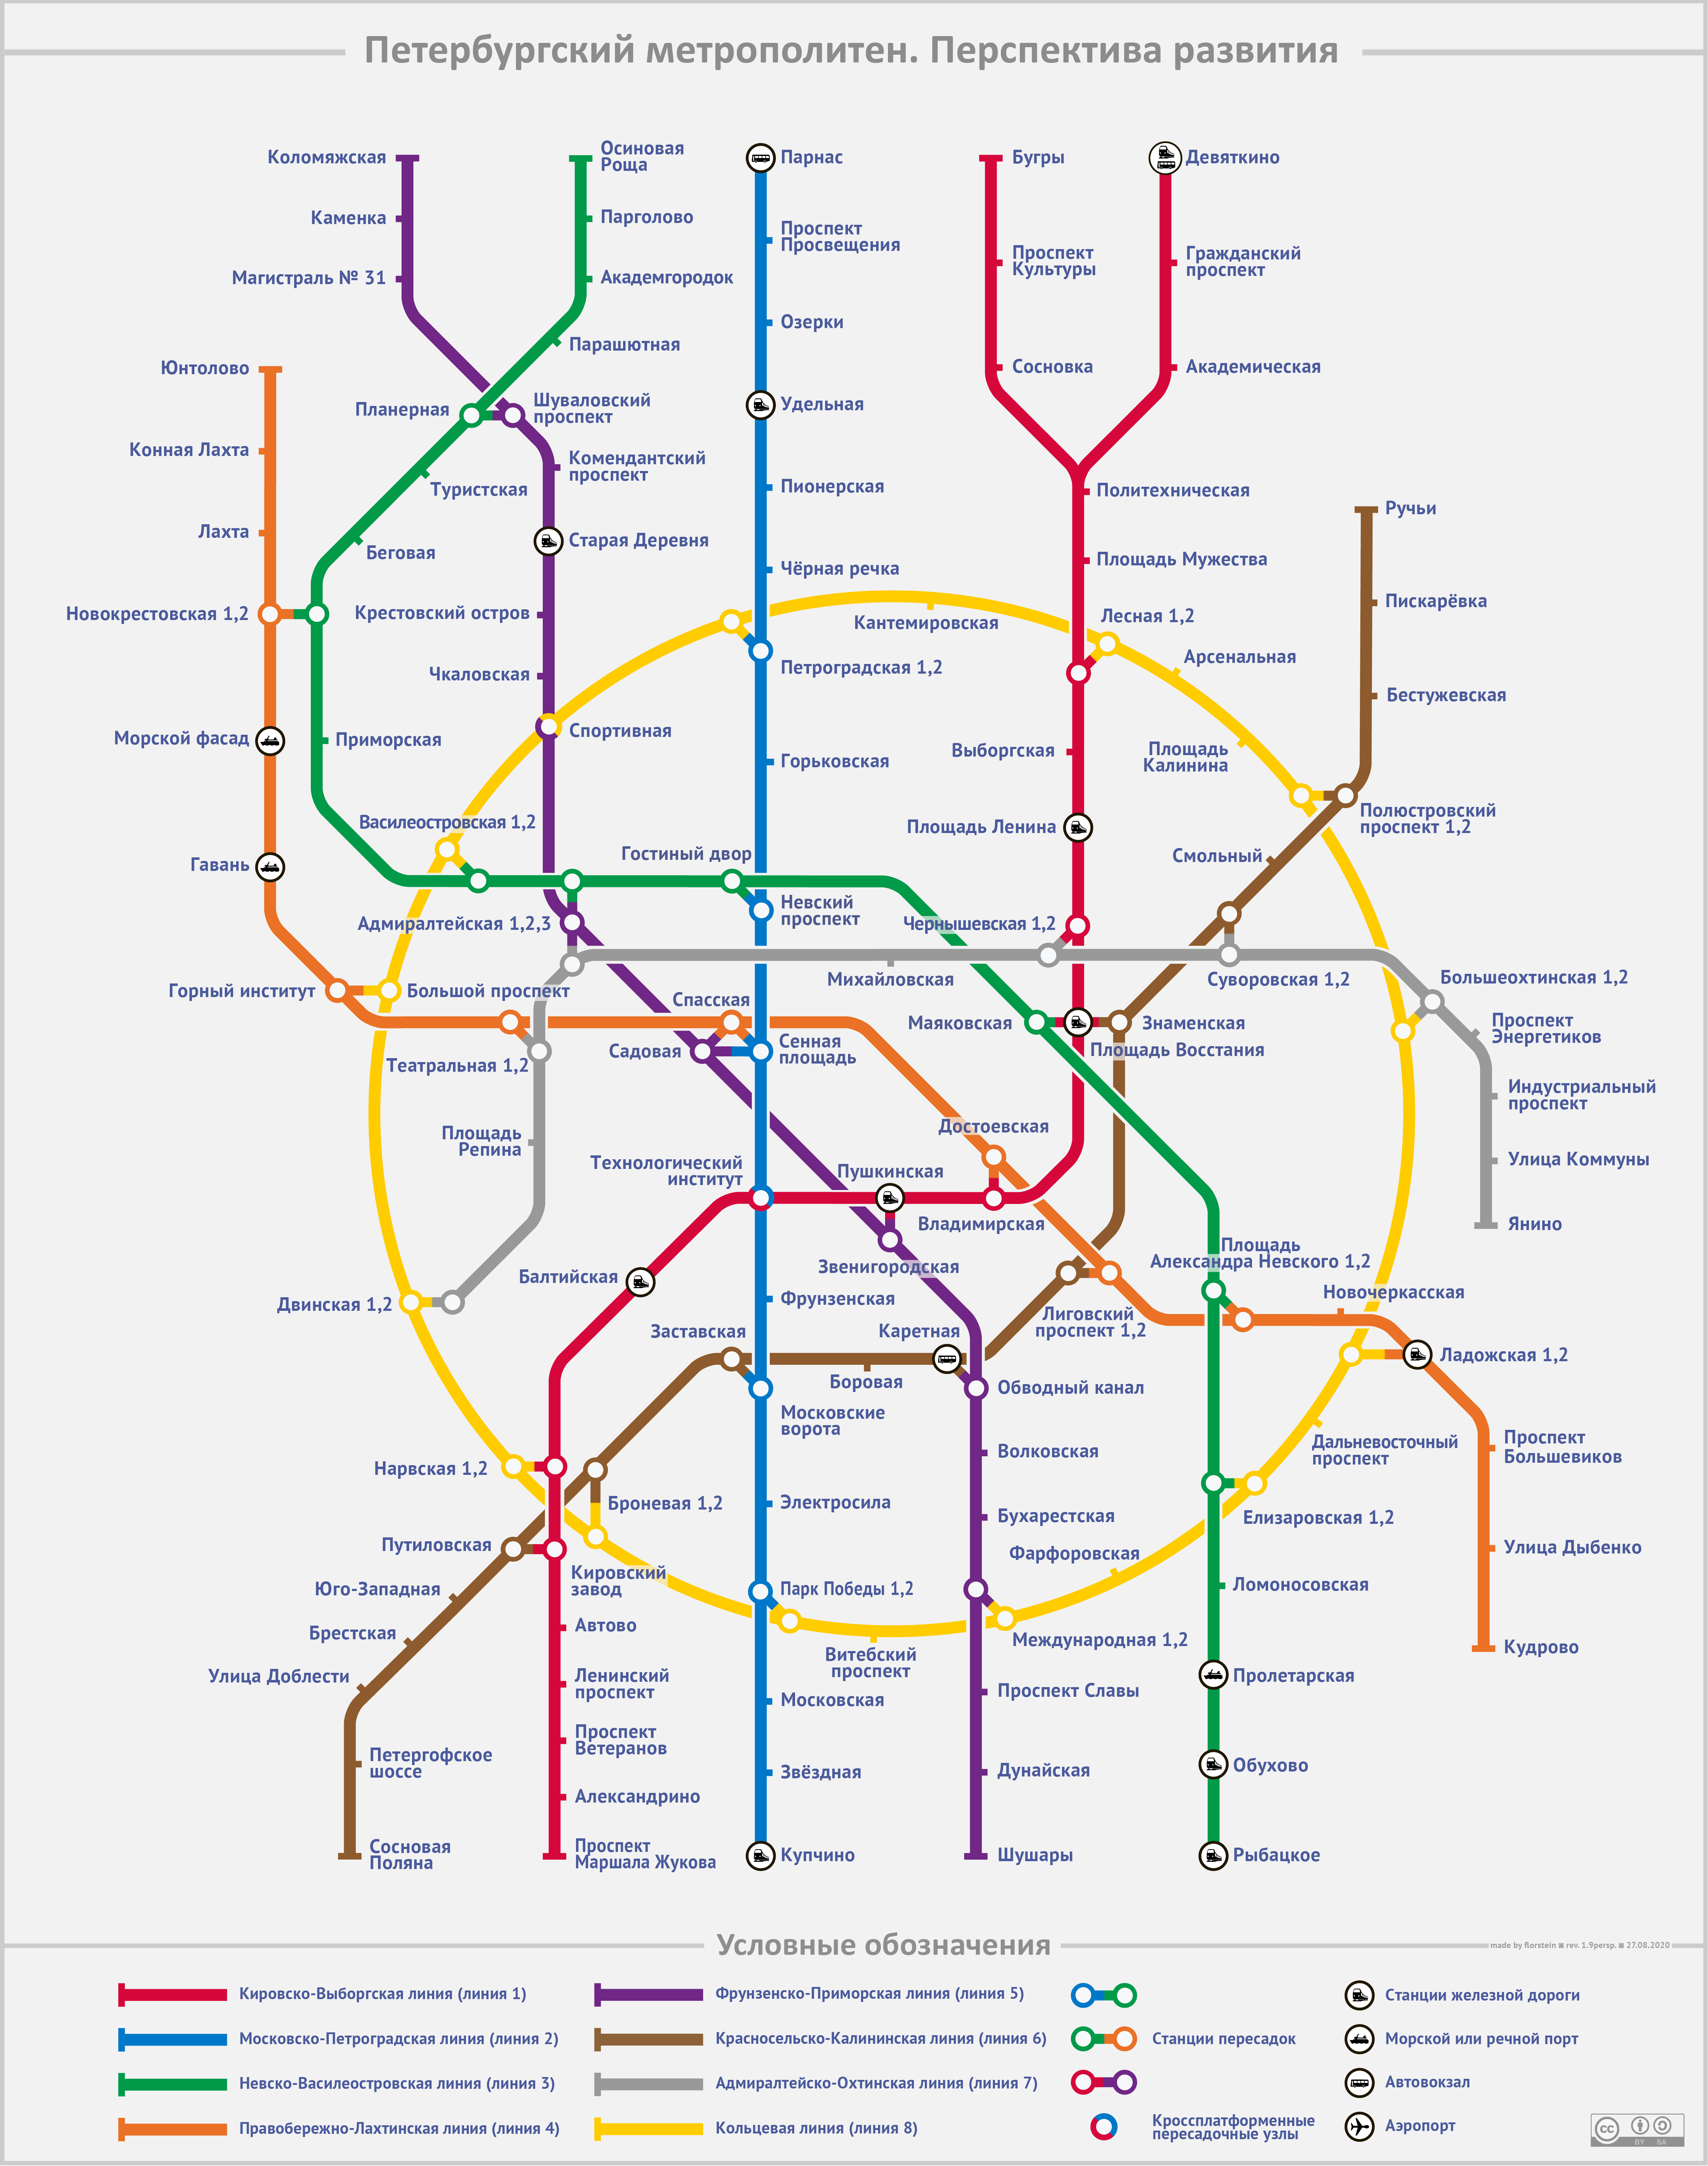 Saint Petersburg metro future map